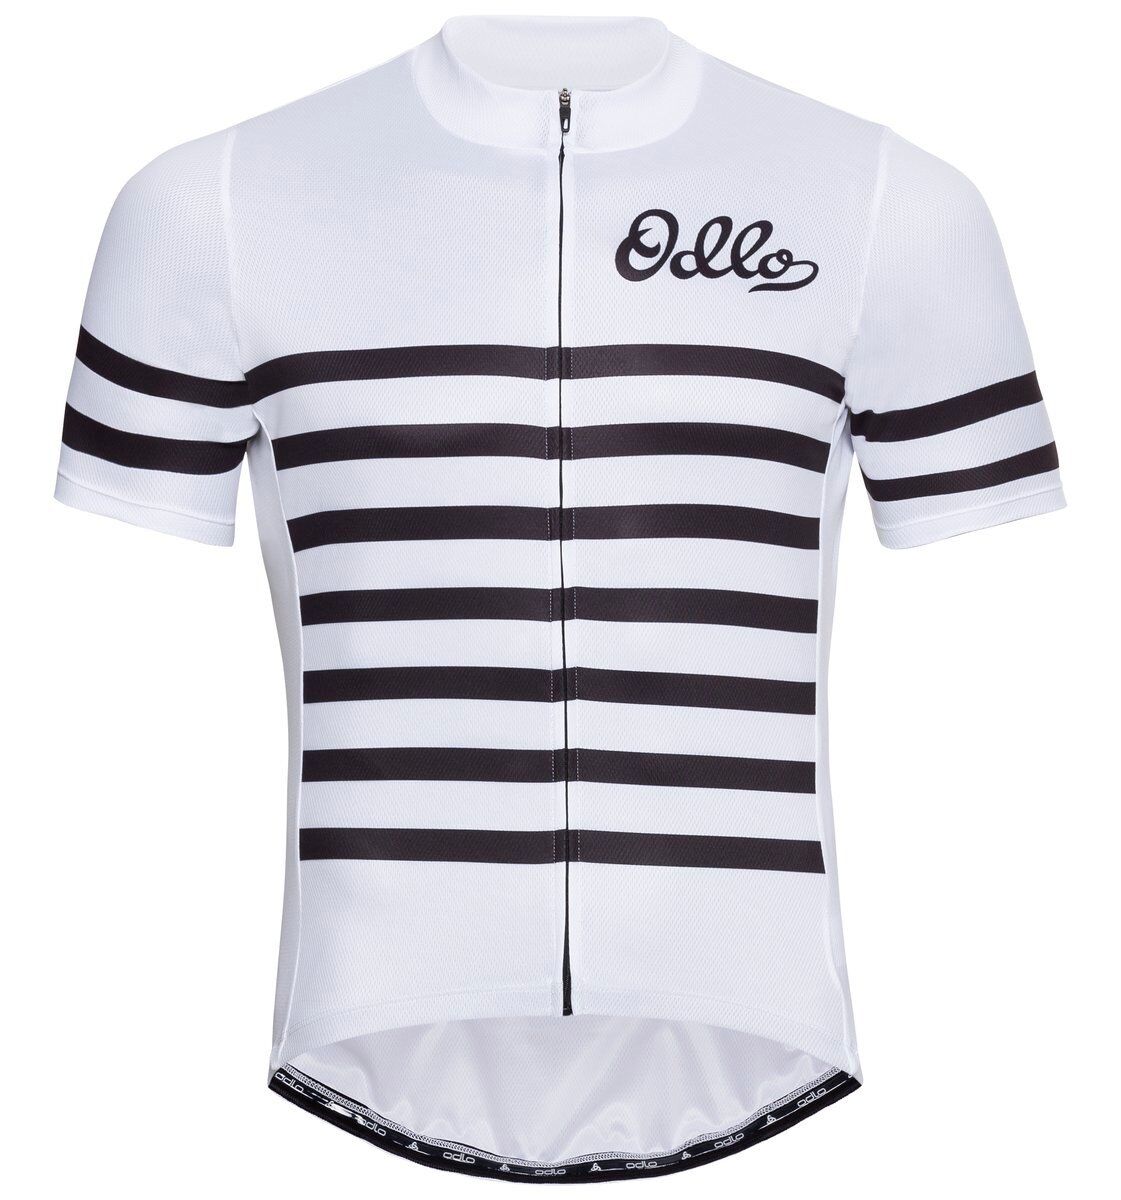 Odlo Element - Cycling jersey - Men's